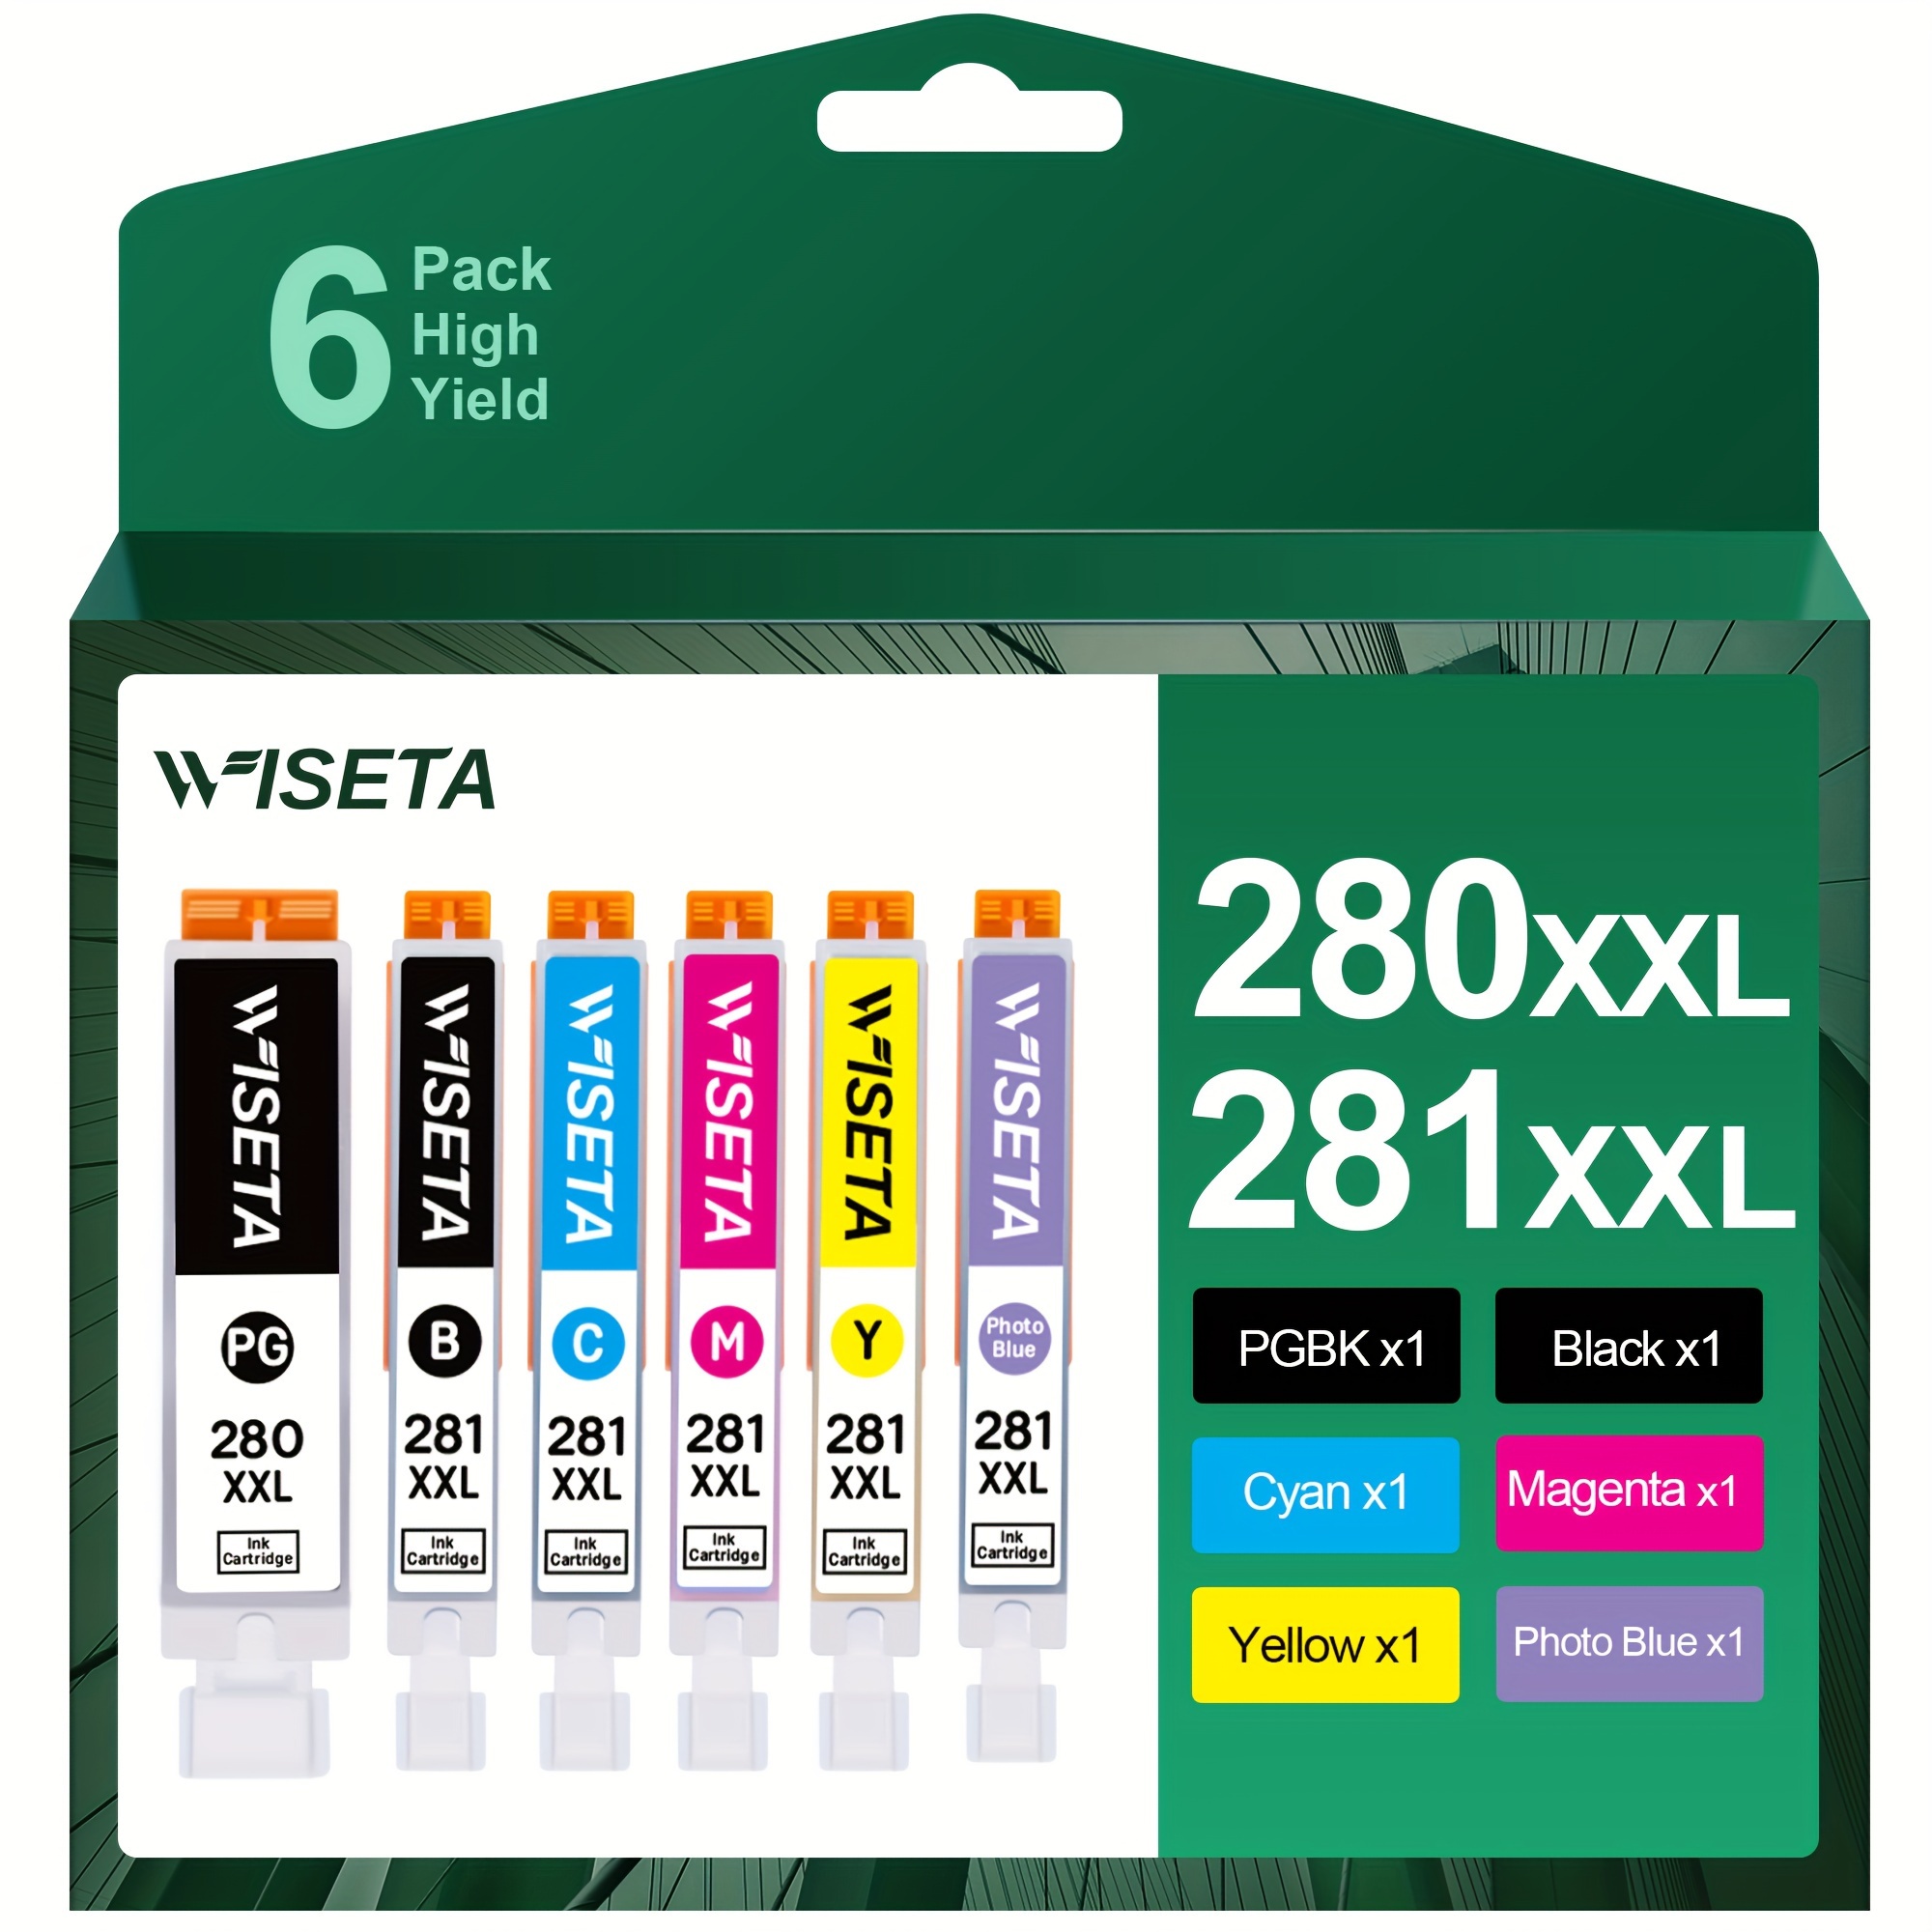 

Wiseta Replacement For Pgi-280xxl Pgi 280 Xxl Compatible With Pixma Tr7520 Tr8520 Ts6120 Ts6220 Ts8120 Ts8220 Ts9120 Ts9520 Printer (6 Pgbk)